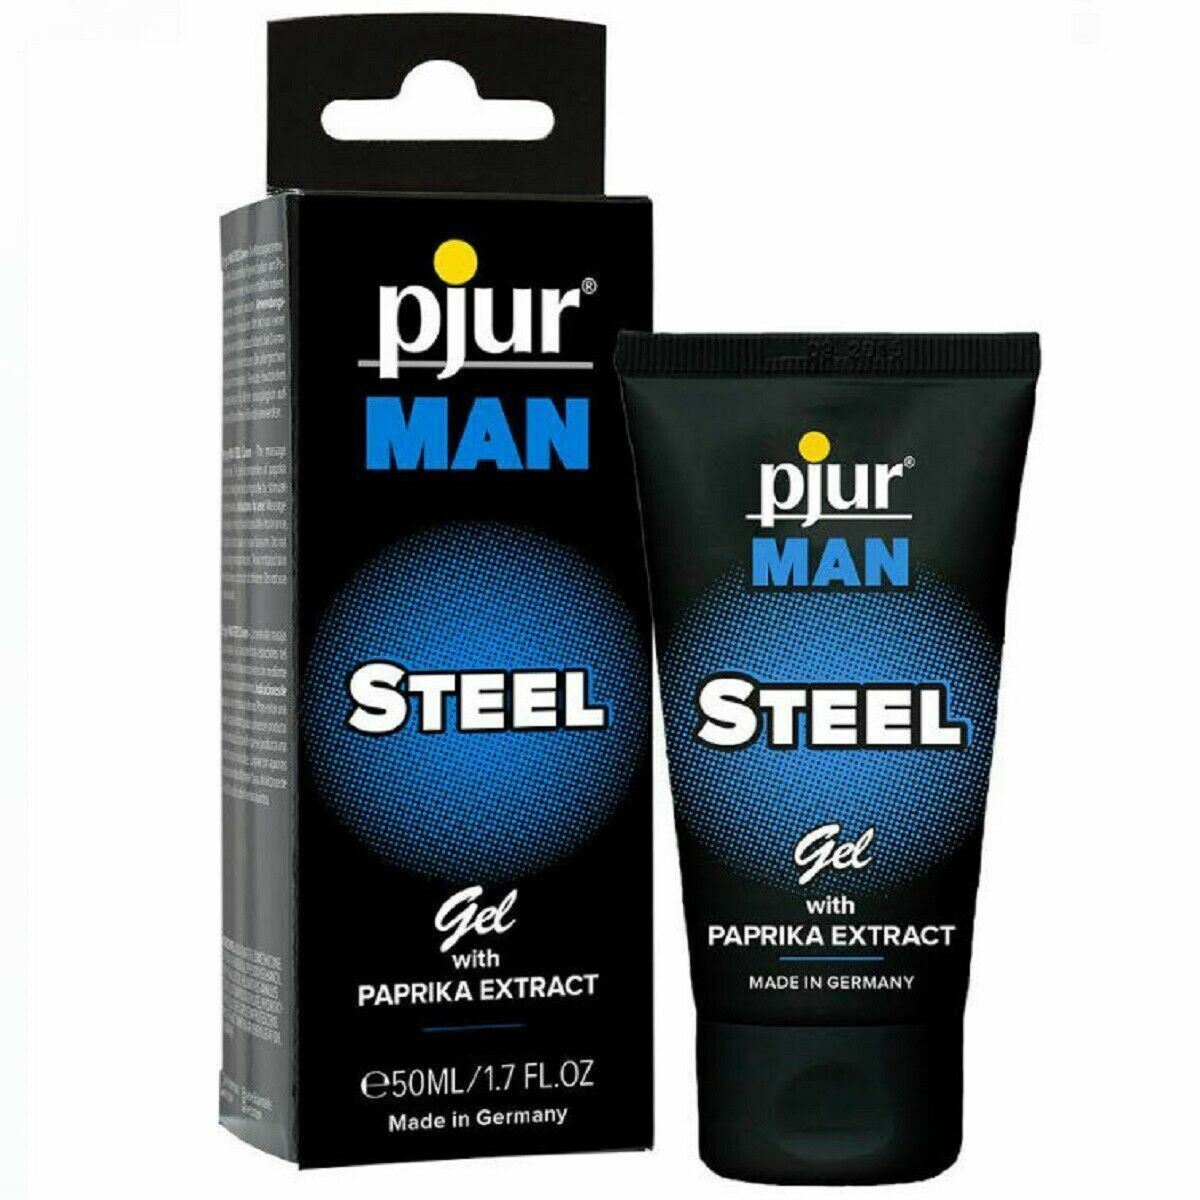 PJUR Man Steel Gel Stimulans Gleitmittel Massagecreme Paprika 1,7 fl oz 50 ml